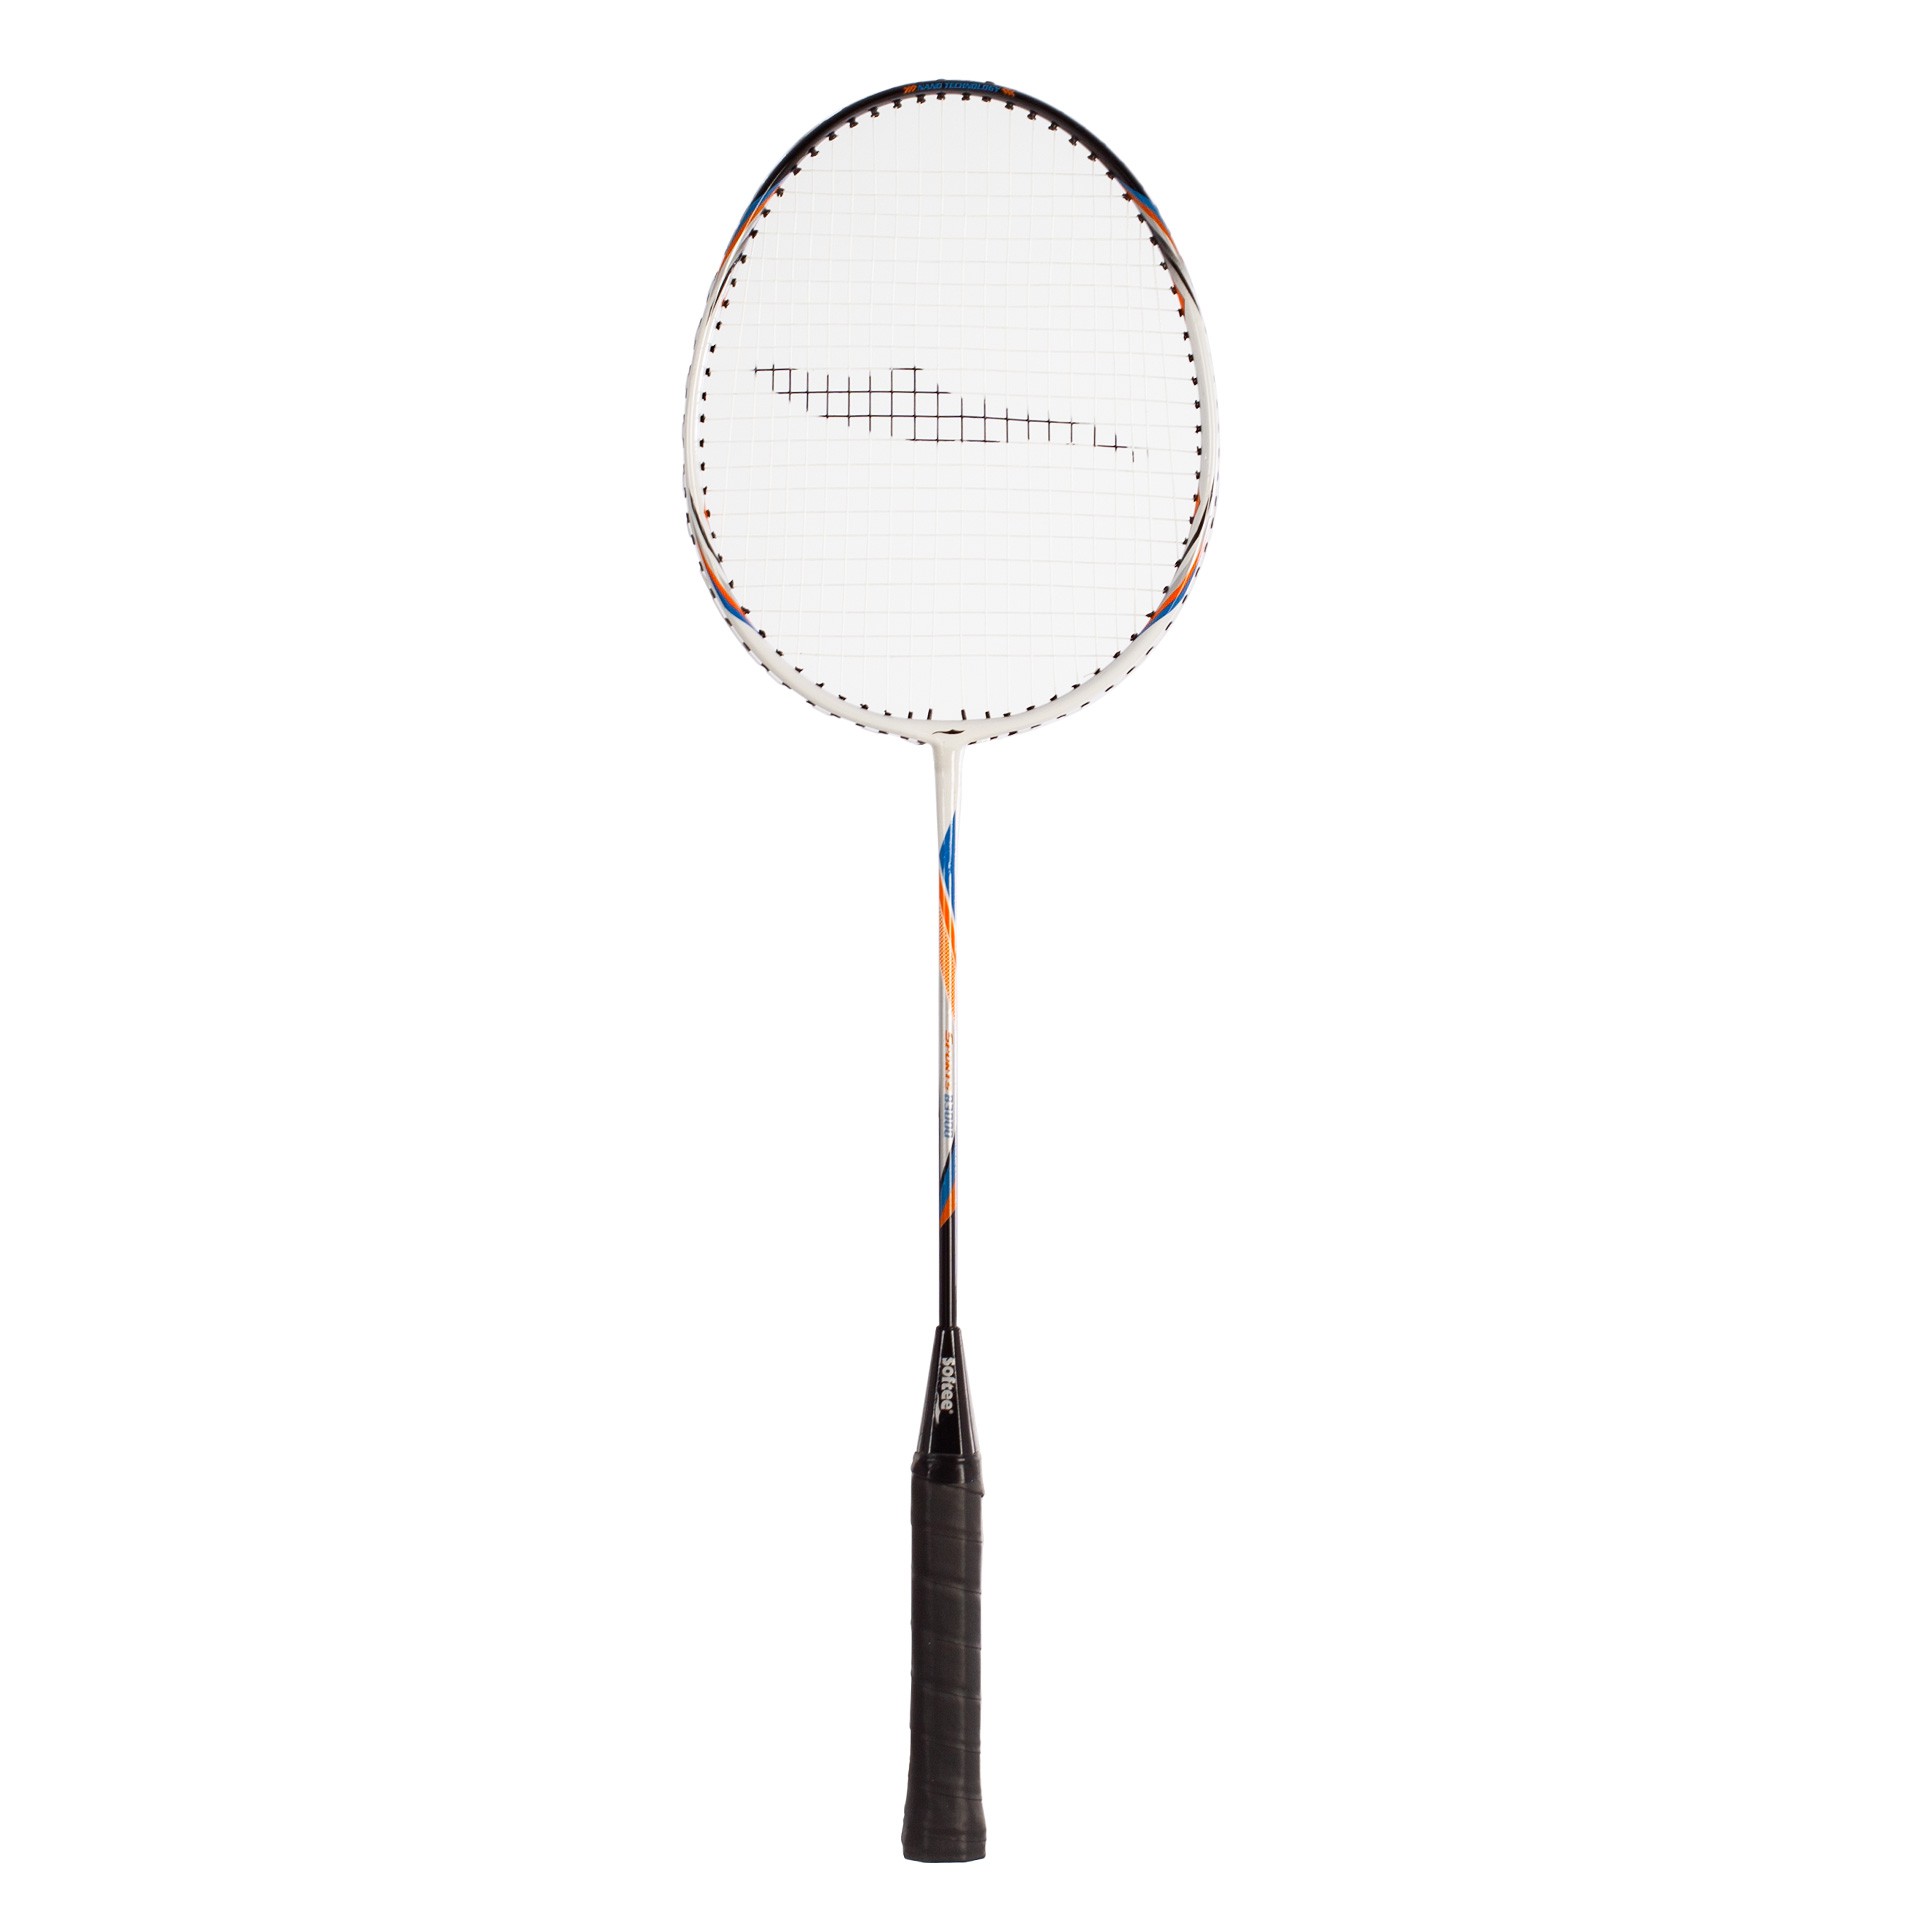 Raqueta Badminton Softee ‘B3000’